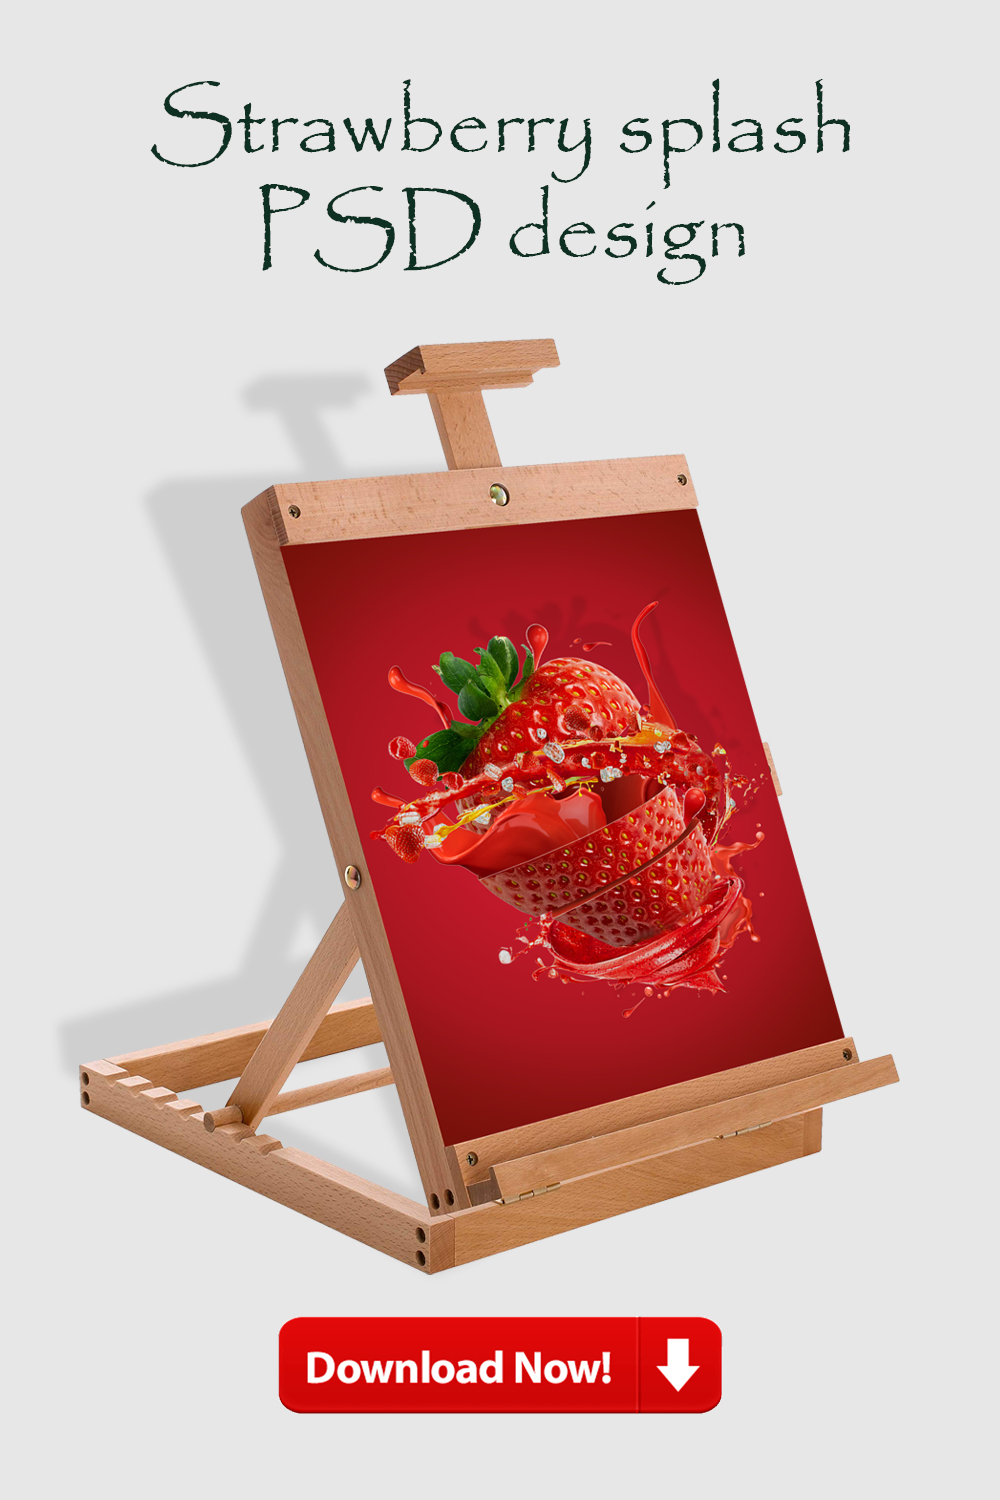 High quality PSD Realistic strawberry splash design pinterest preview image.